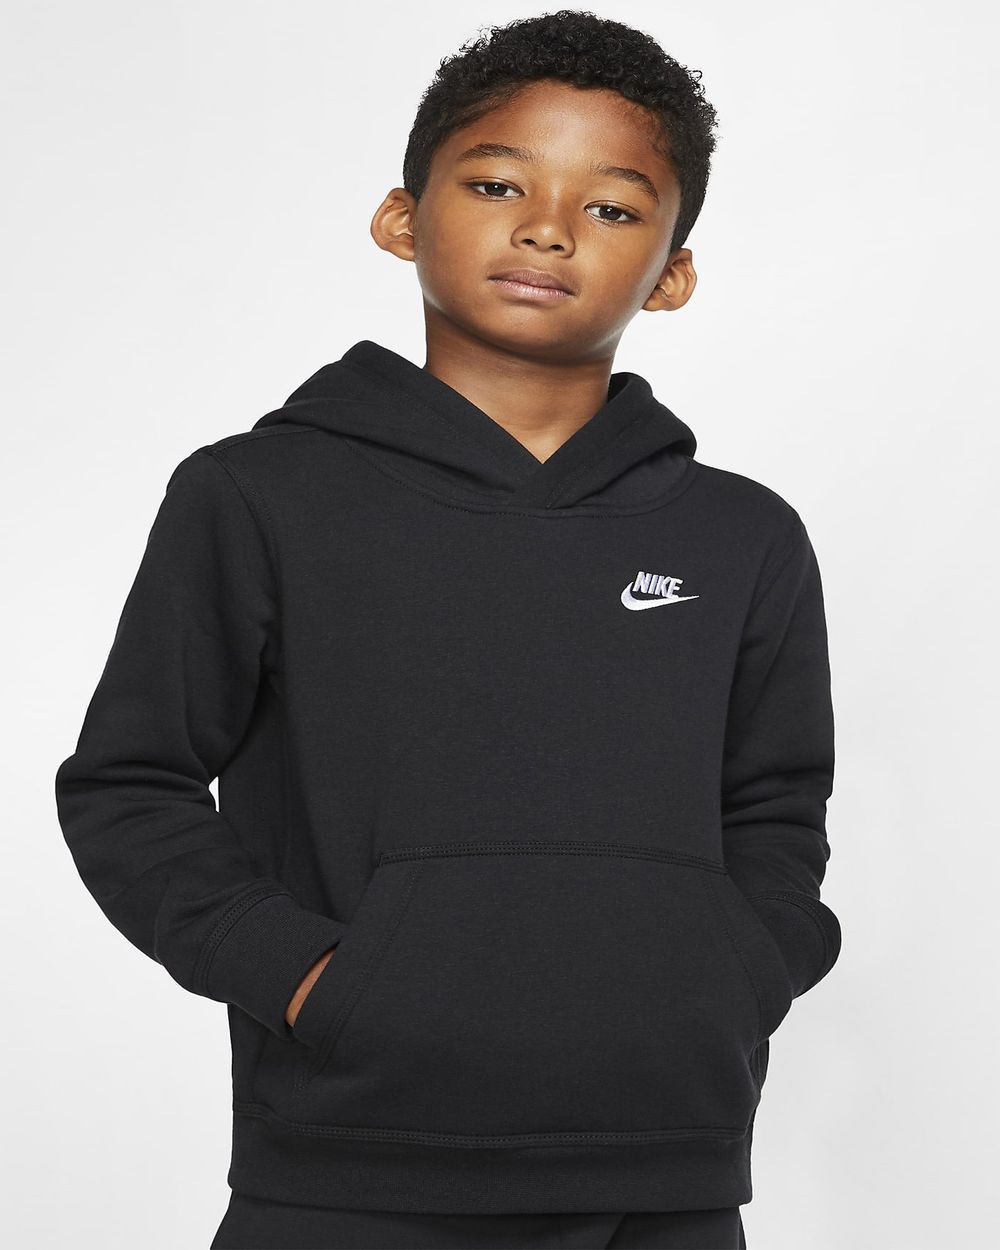 Sweat capuche Nike Sportswear Club Fleece pour Enfant - BV3757-011 - Noir